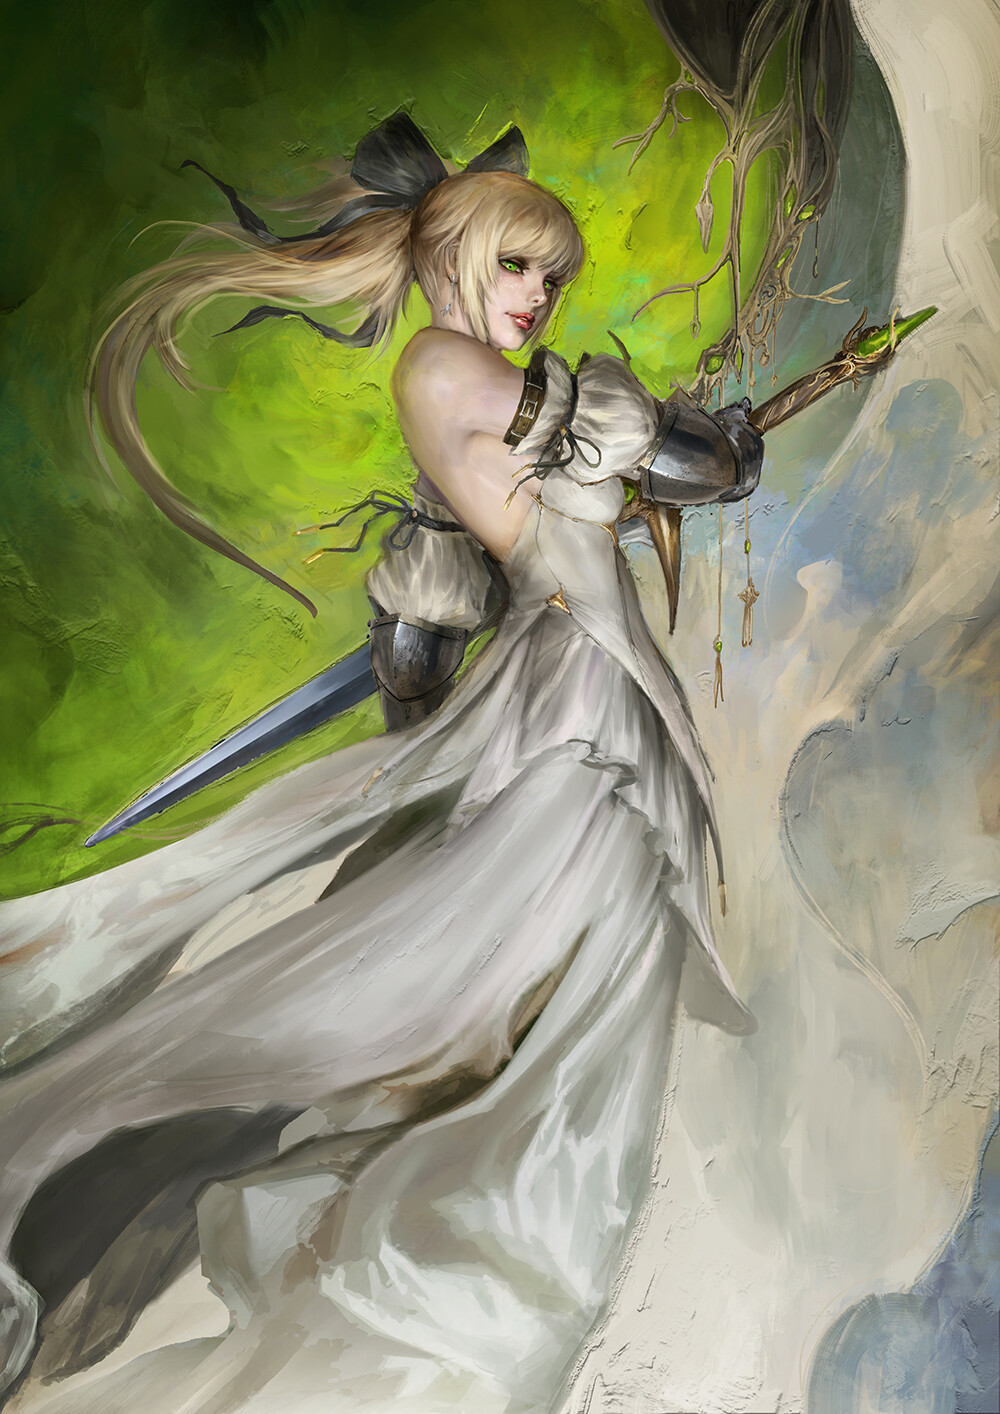 Daniel Kamarudin Artwork Fantasy Art Fantasy Girl Women Blonde Girls With Swords Sword Weapon Green  1000x1414